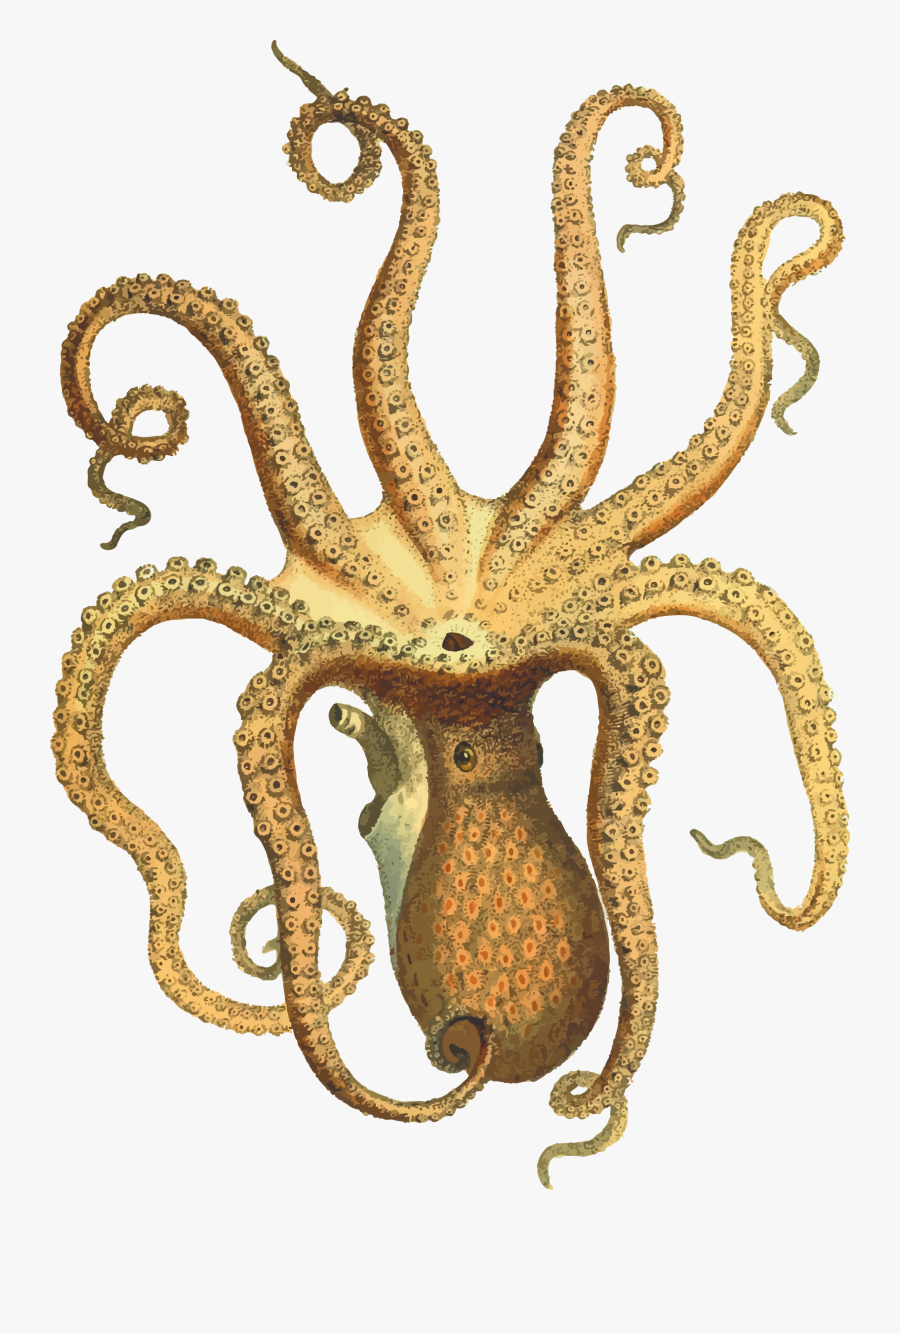 Clipart - Vintage Octopus Illustration Png, Transparent Clipart